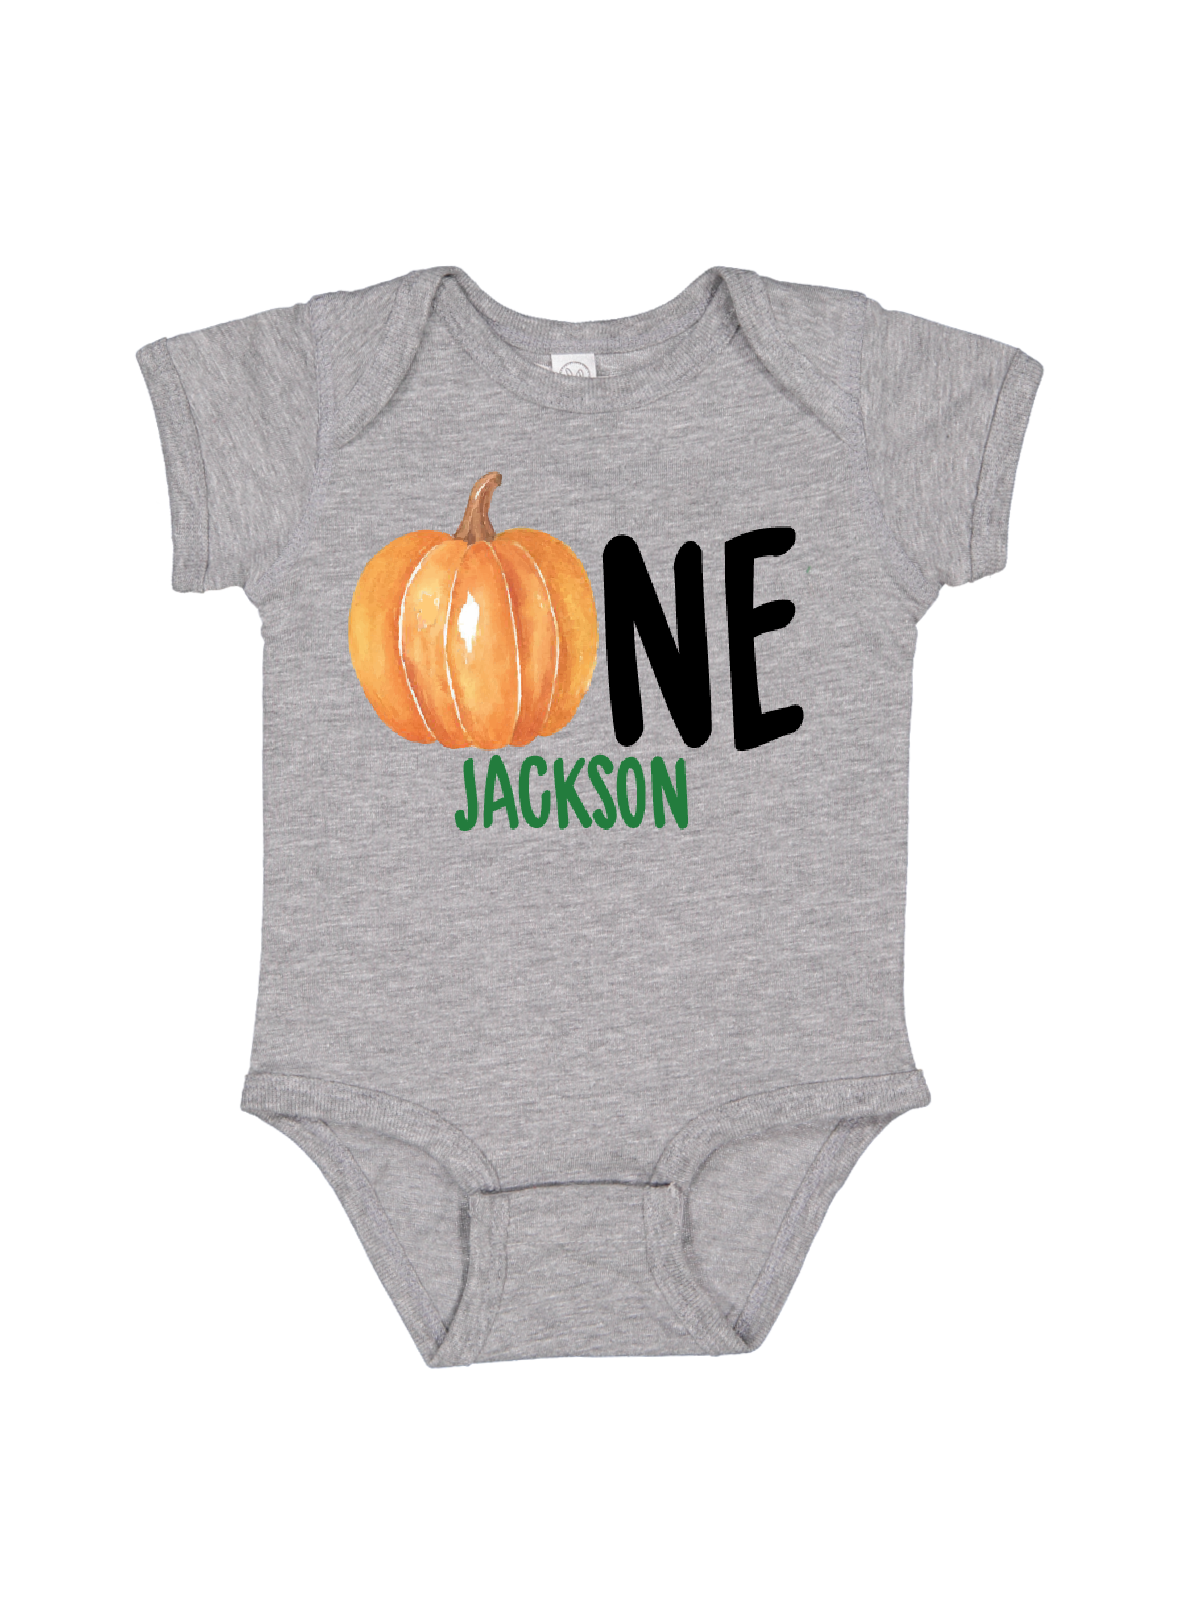 ONE pumpkin baby bodysuit in gray short sleeve